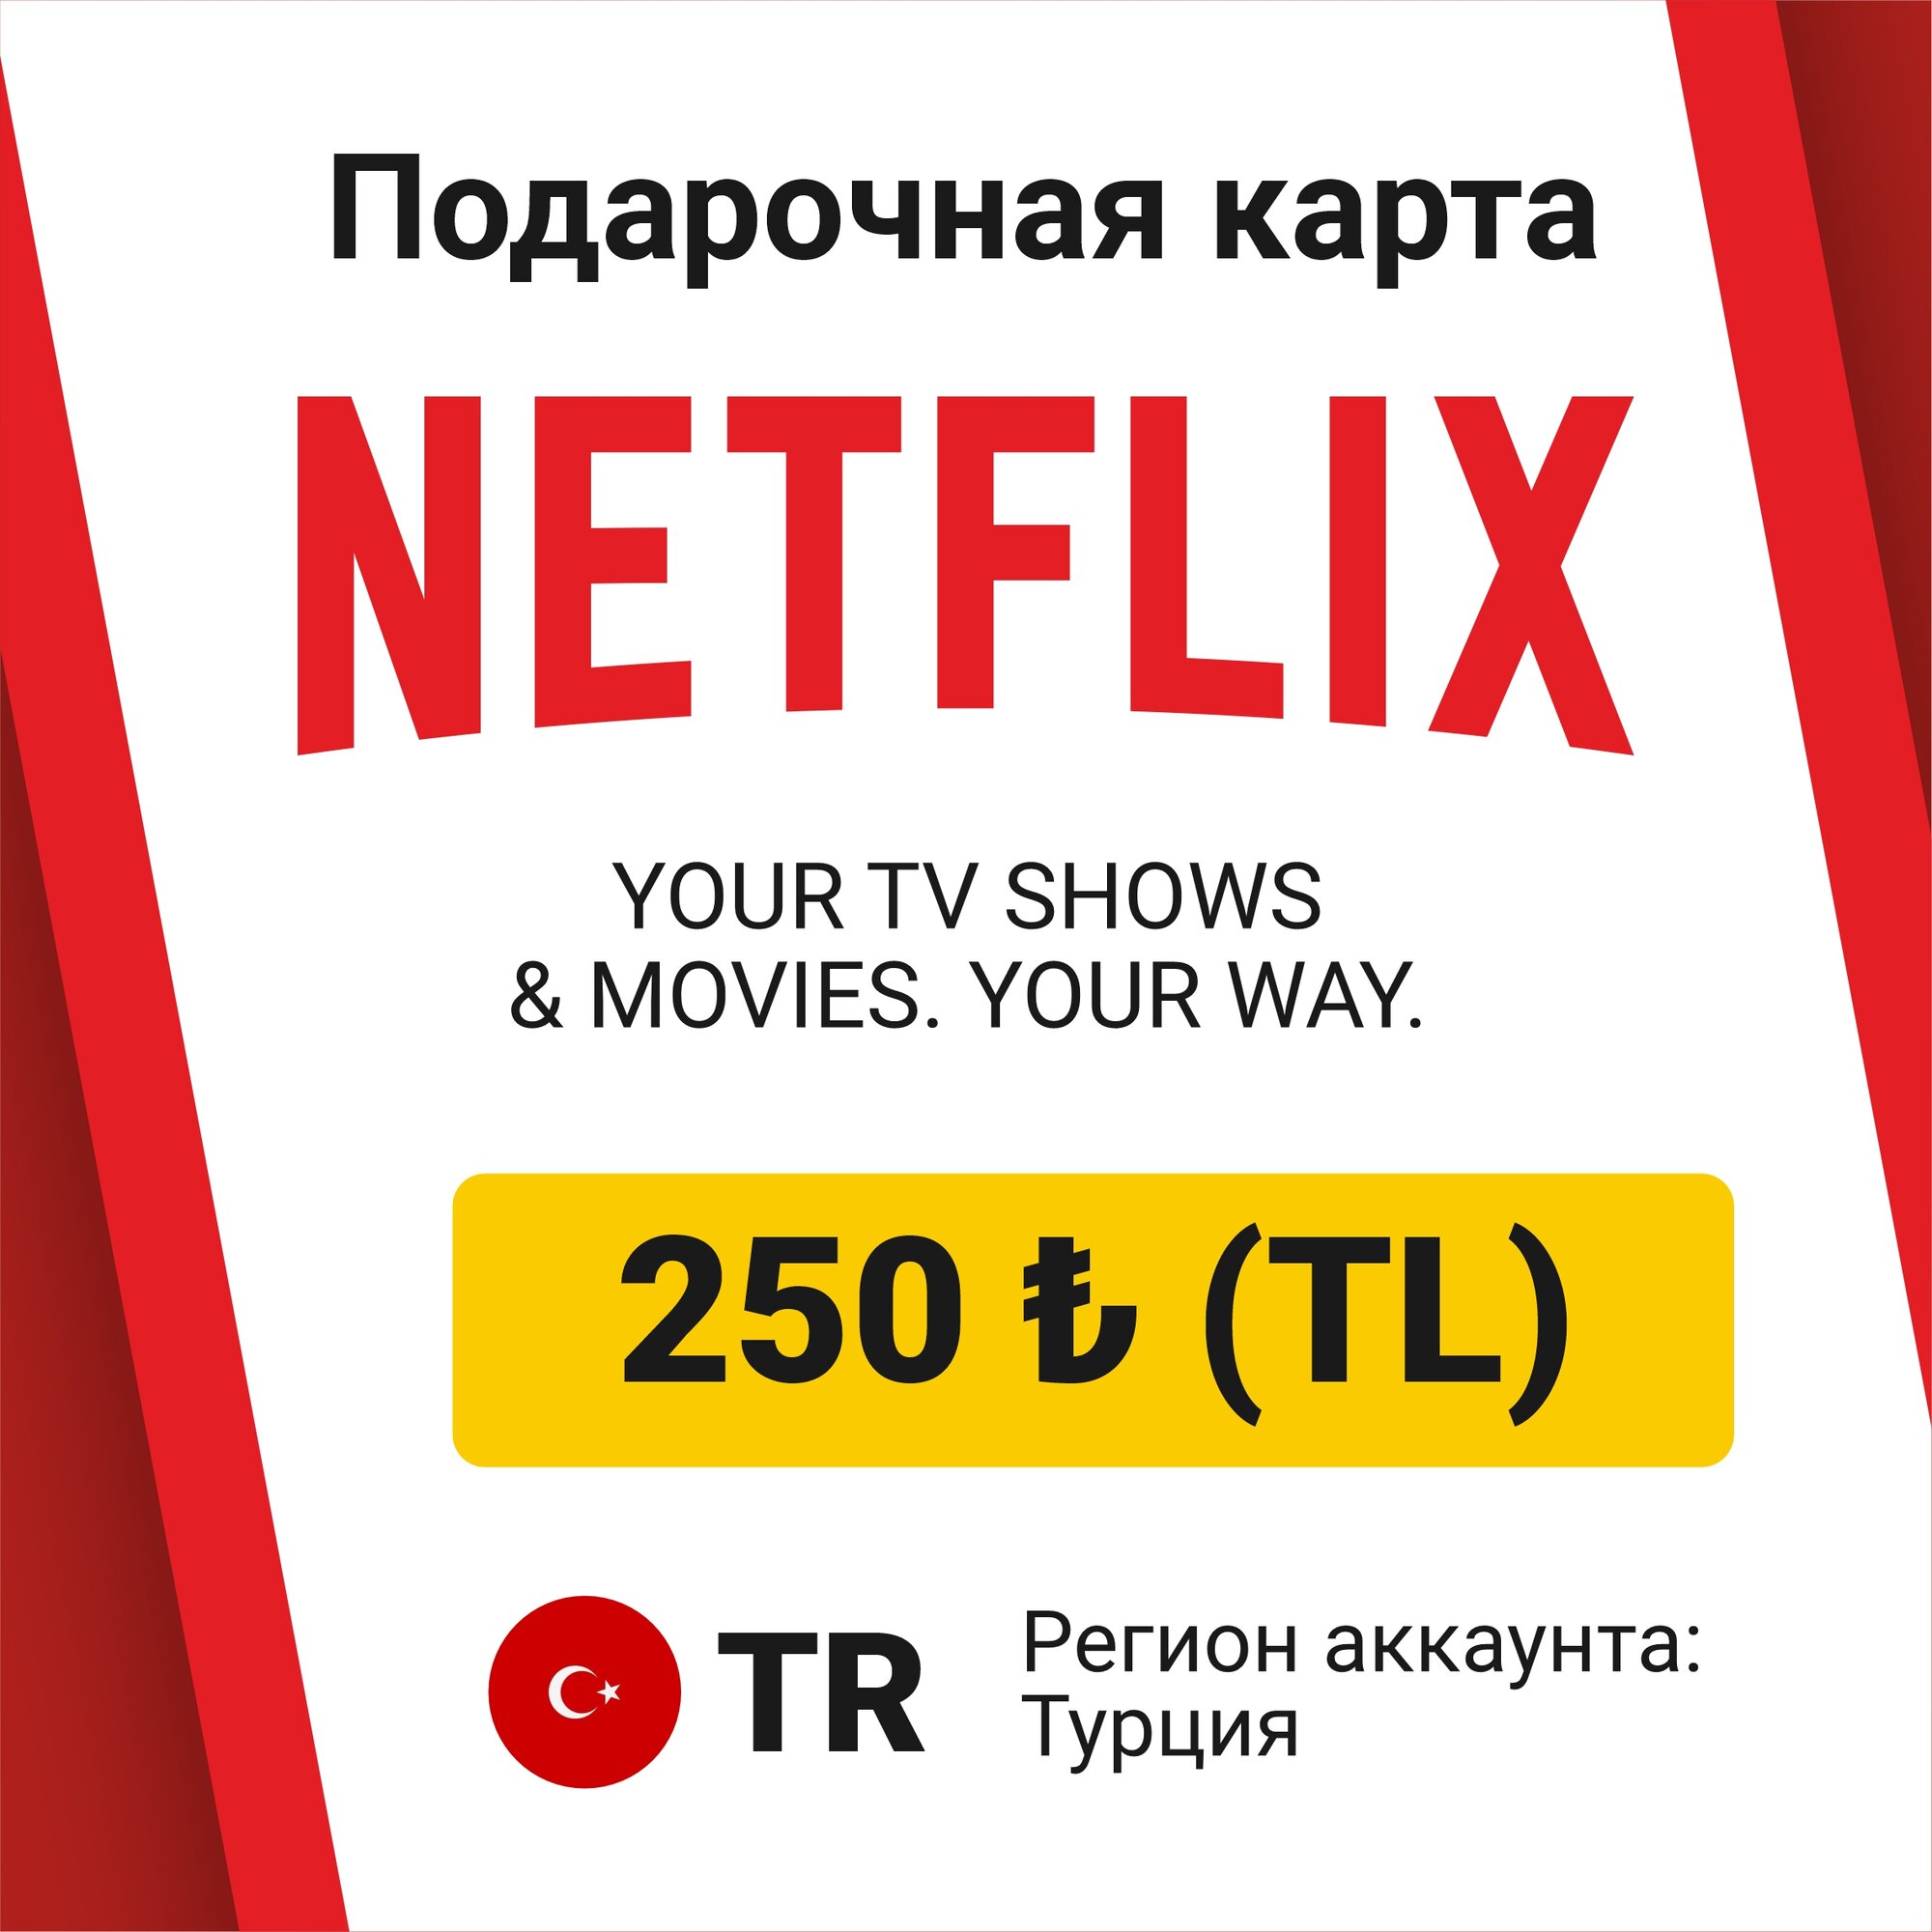 Подарочная карта Netflix 750 ₺ TL Лир (регион: Турция) Цифровой код активации/пополнение счета